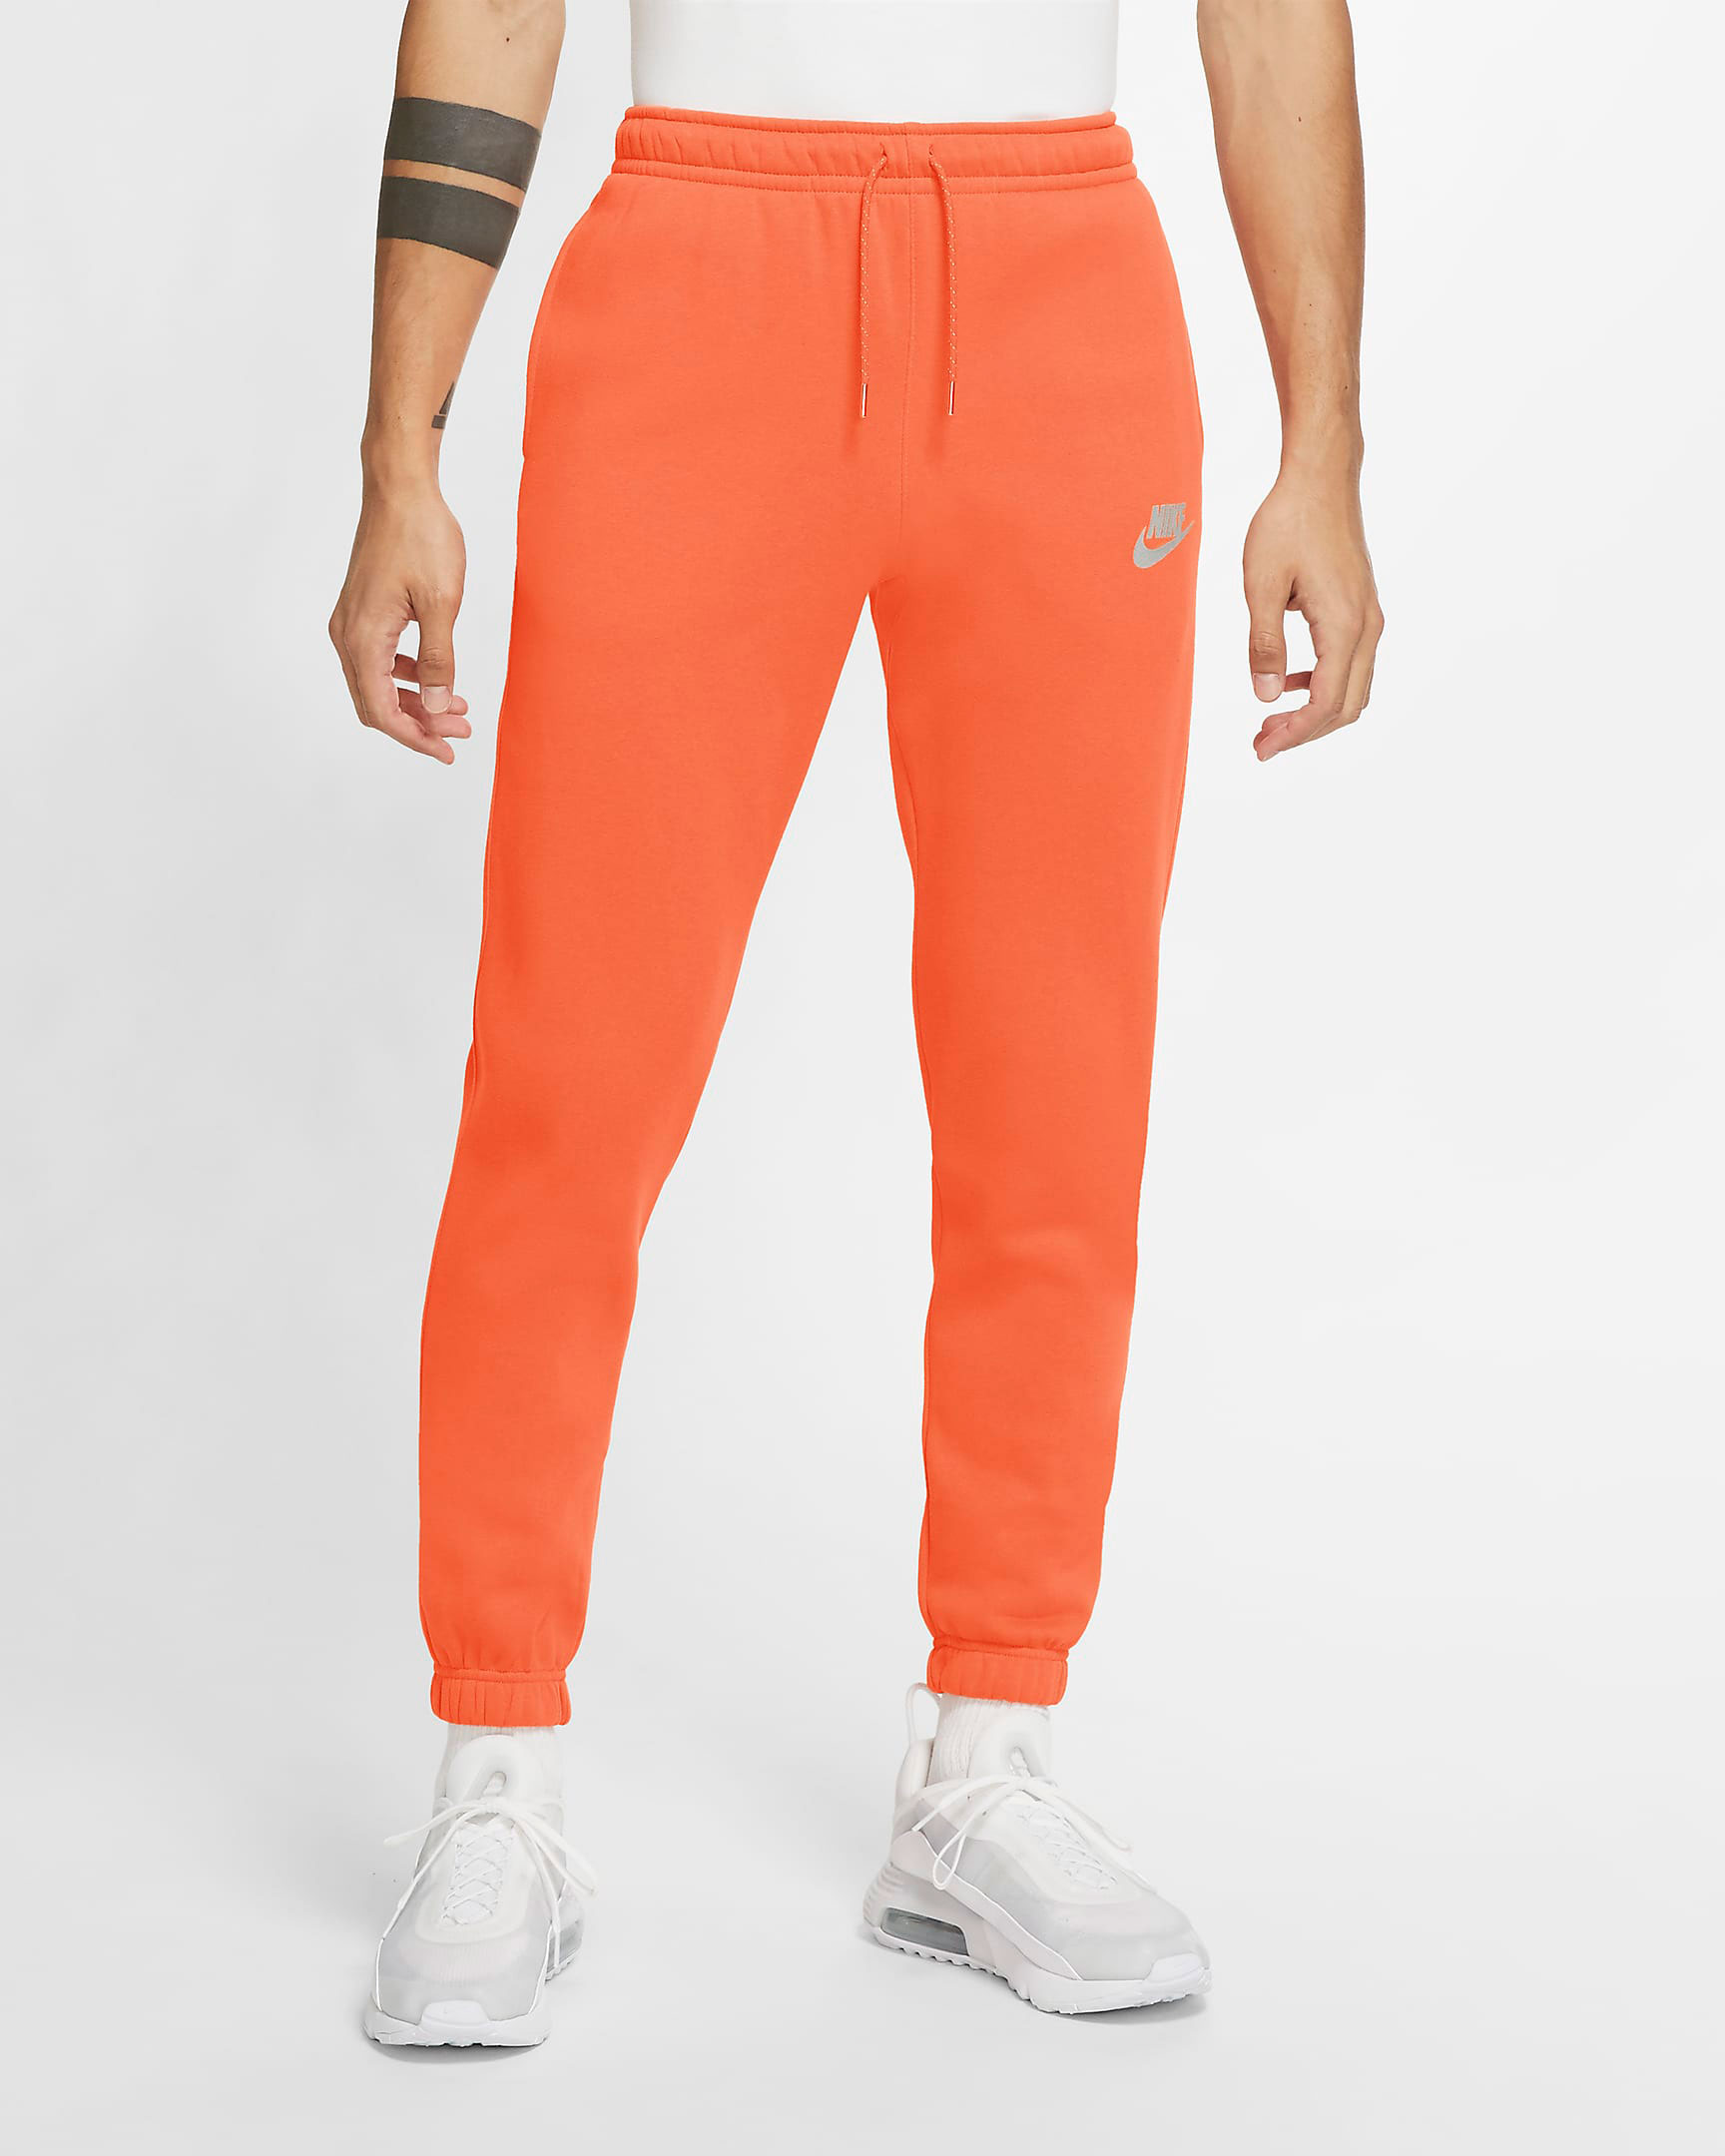 nike-dunk-high-orange-syracuse-pants-match